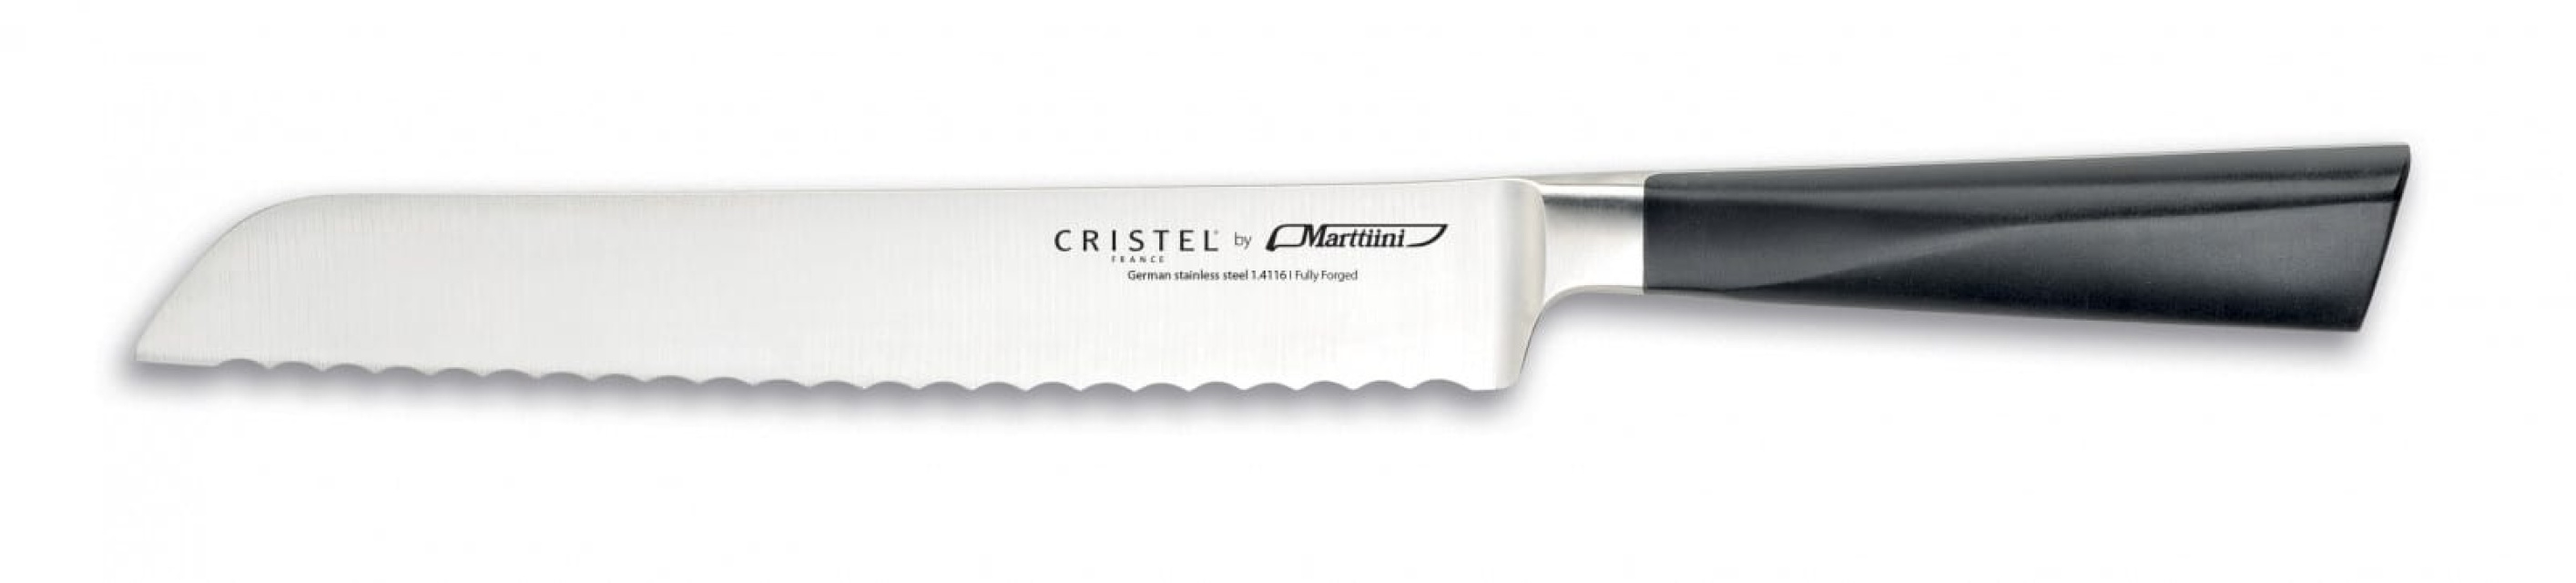 Brødkniv, 21 cm - Cristel